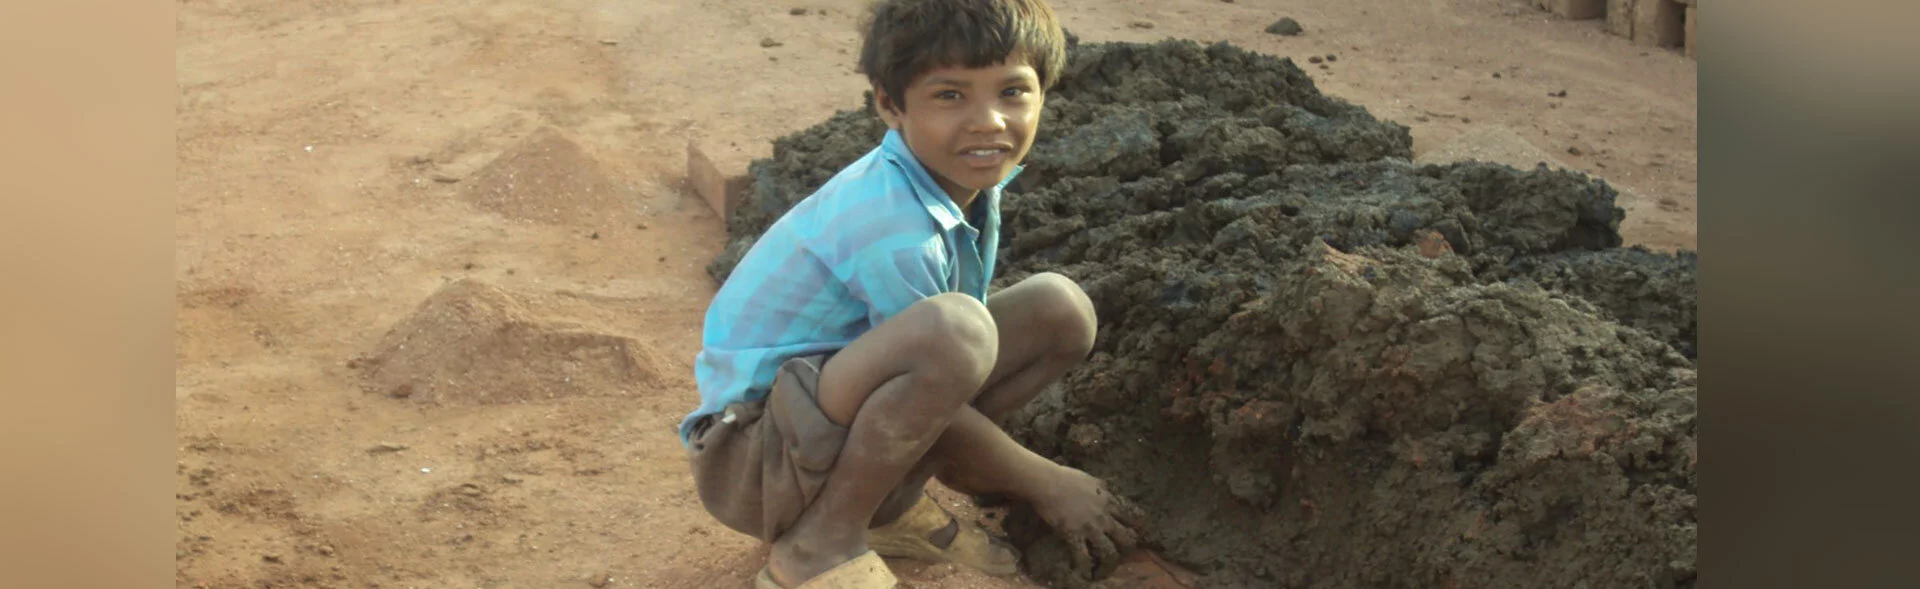 eliminate child labour in india